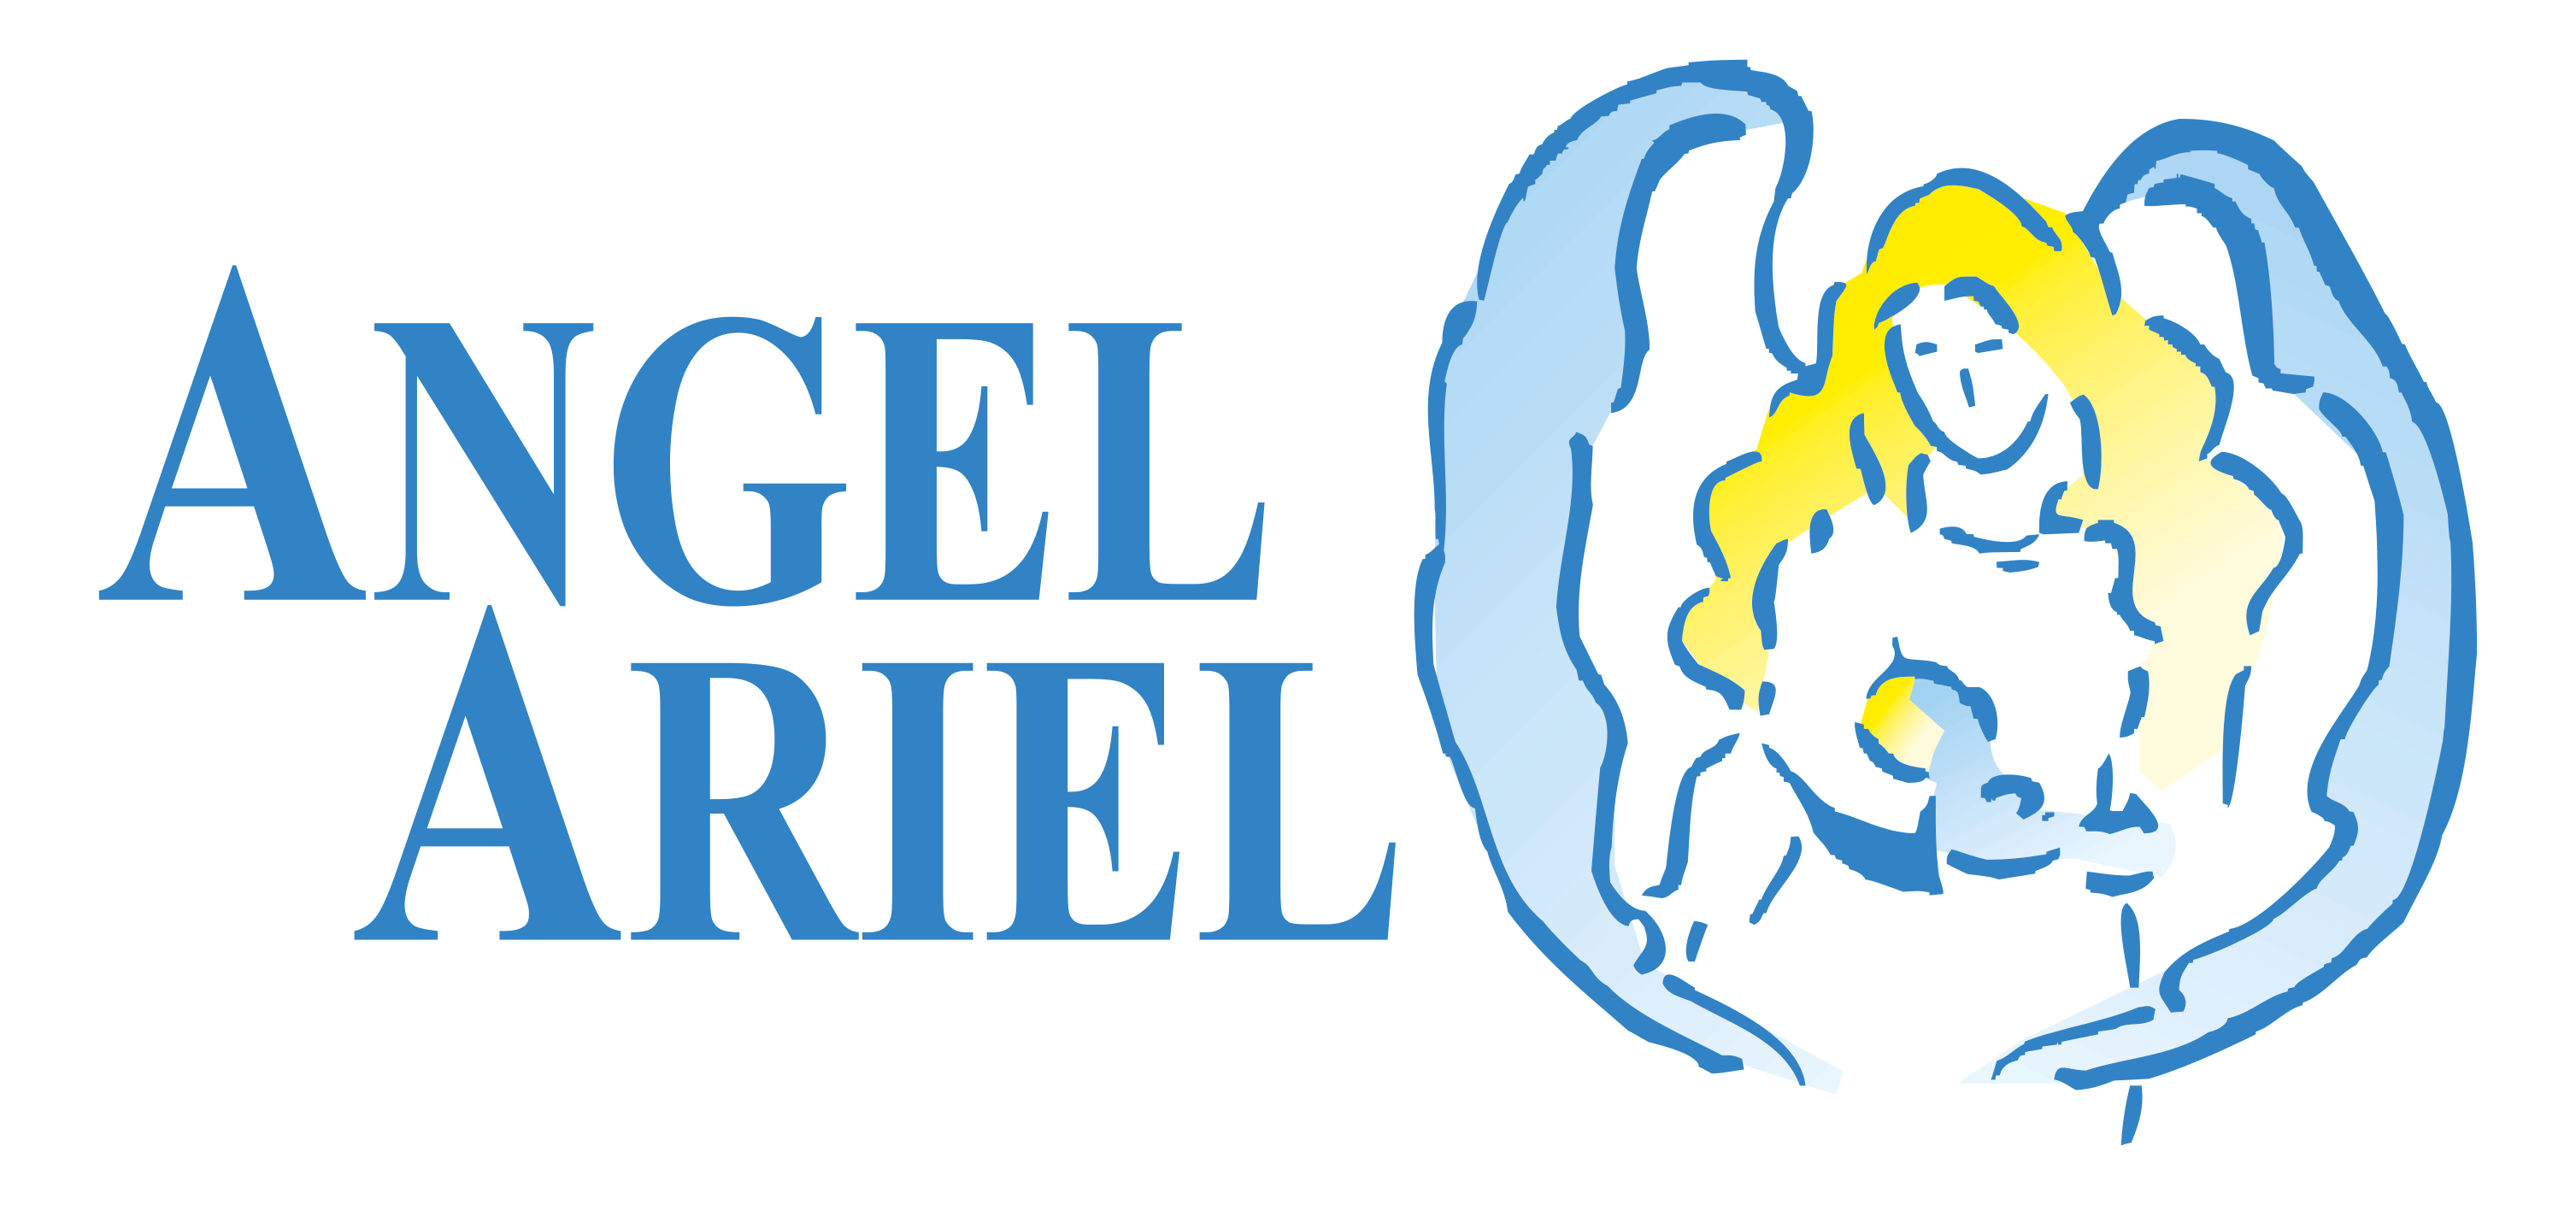 Angel Ariel